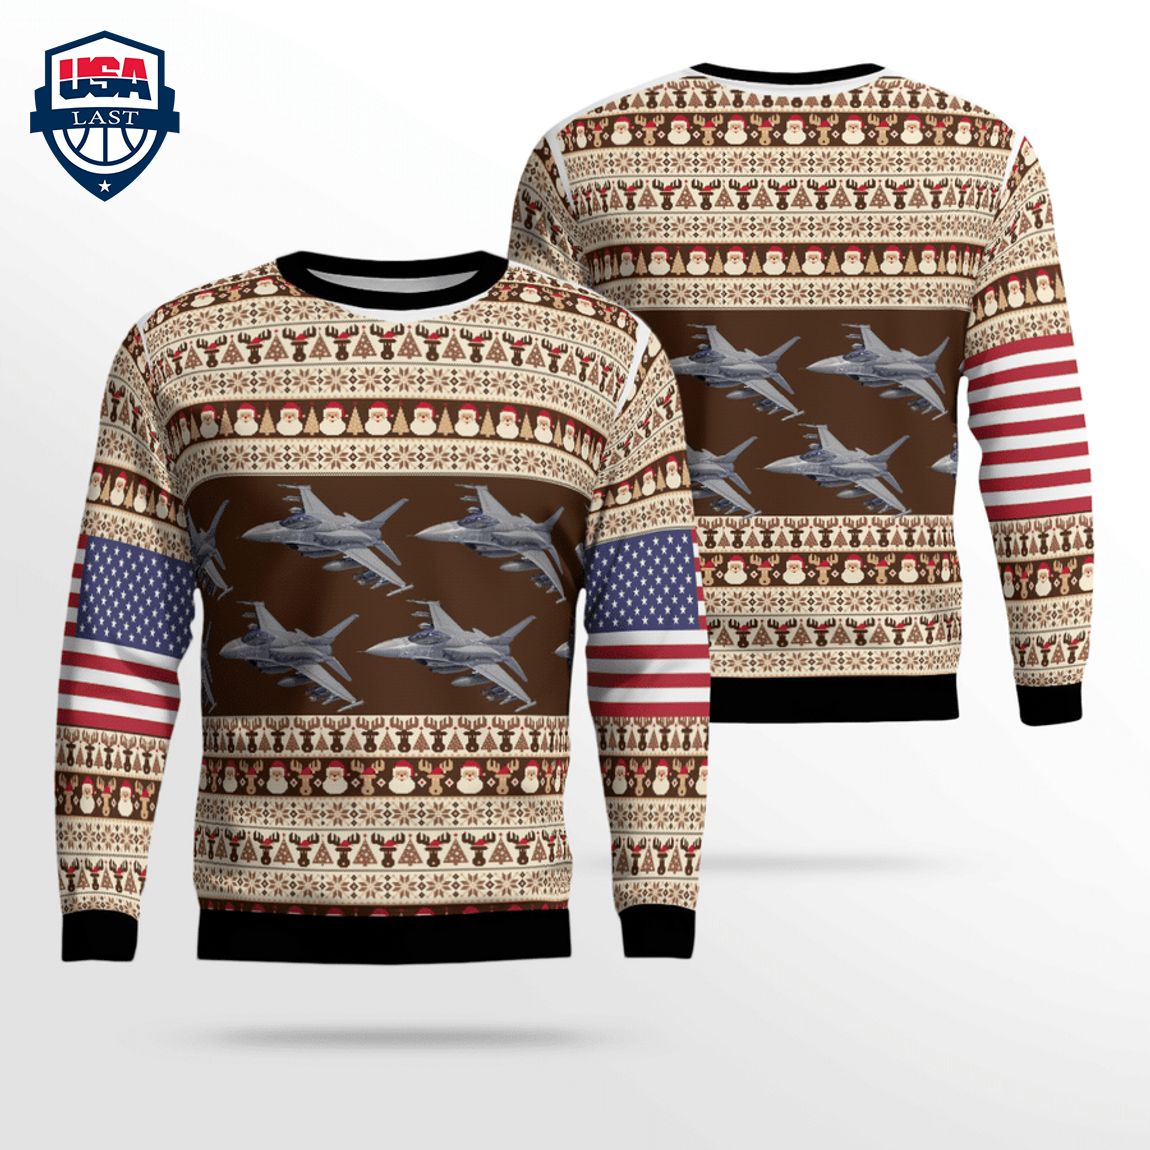 F-16 Fighting Falcon 3D Christmas Sweater – Saleoff